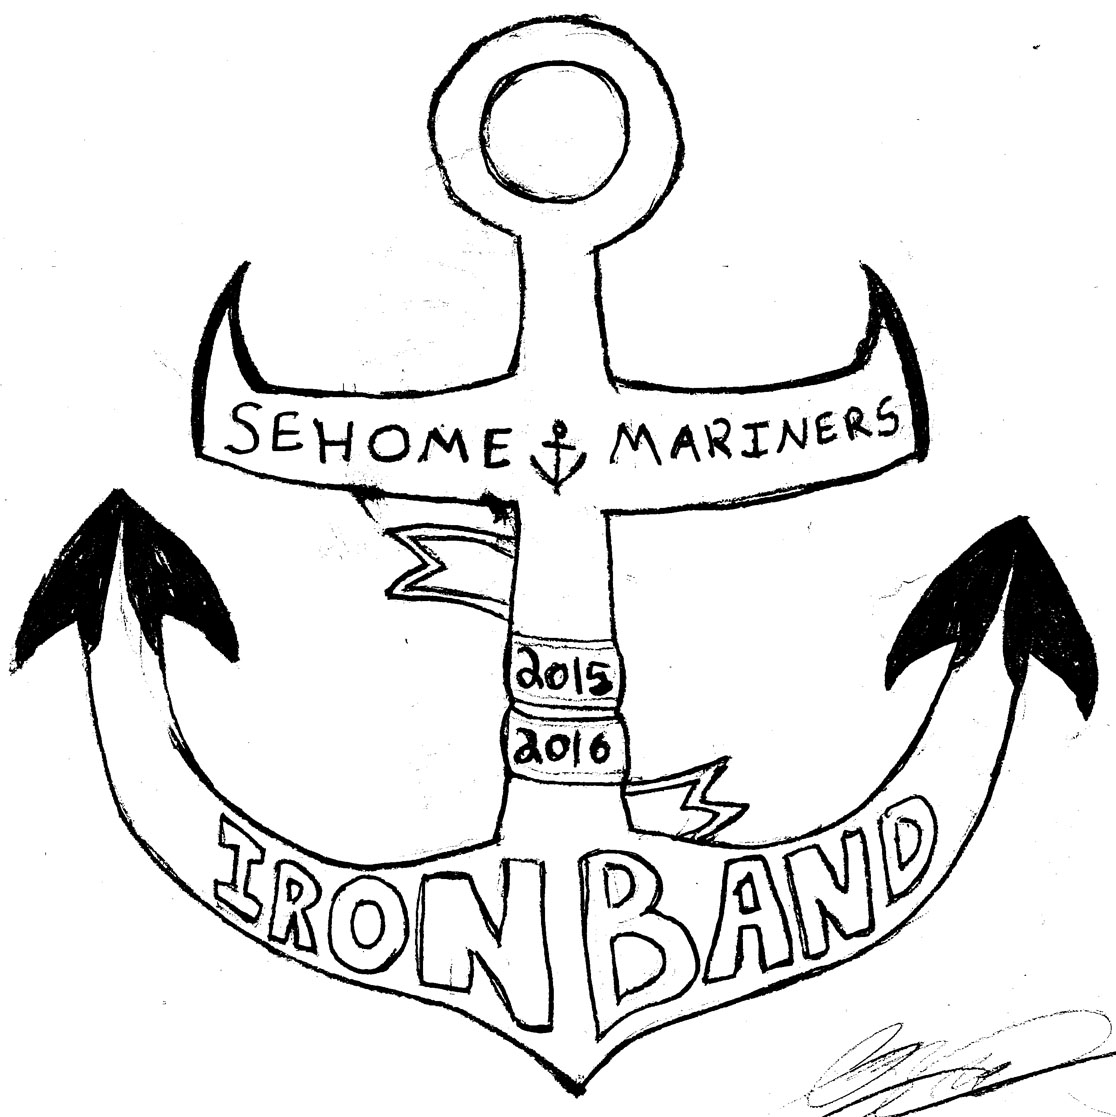 Sehome Band - Homecoming game 2015